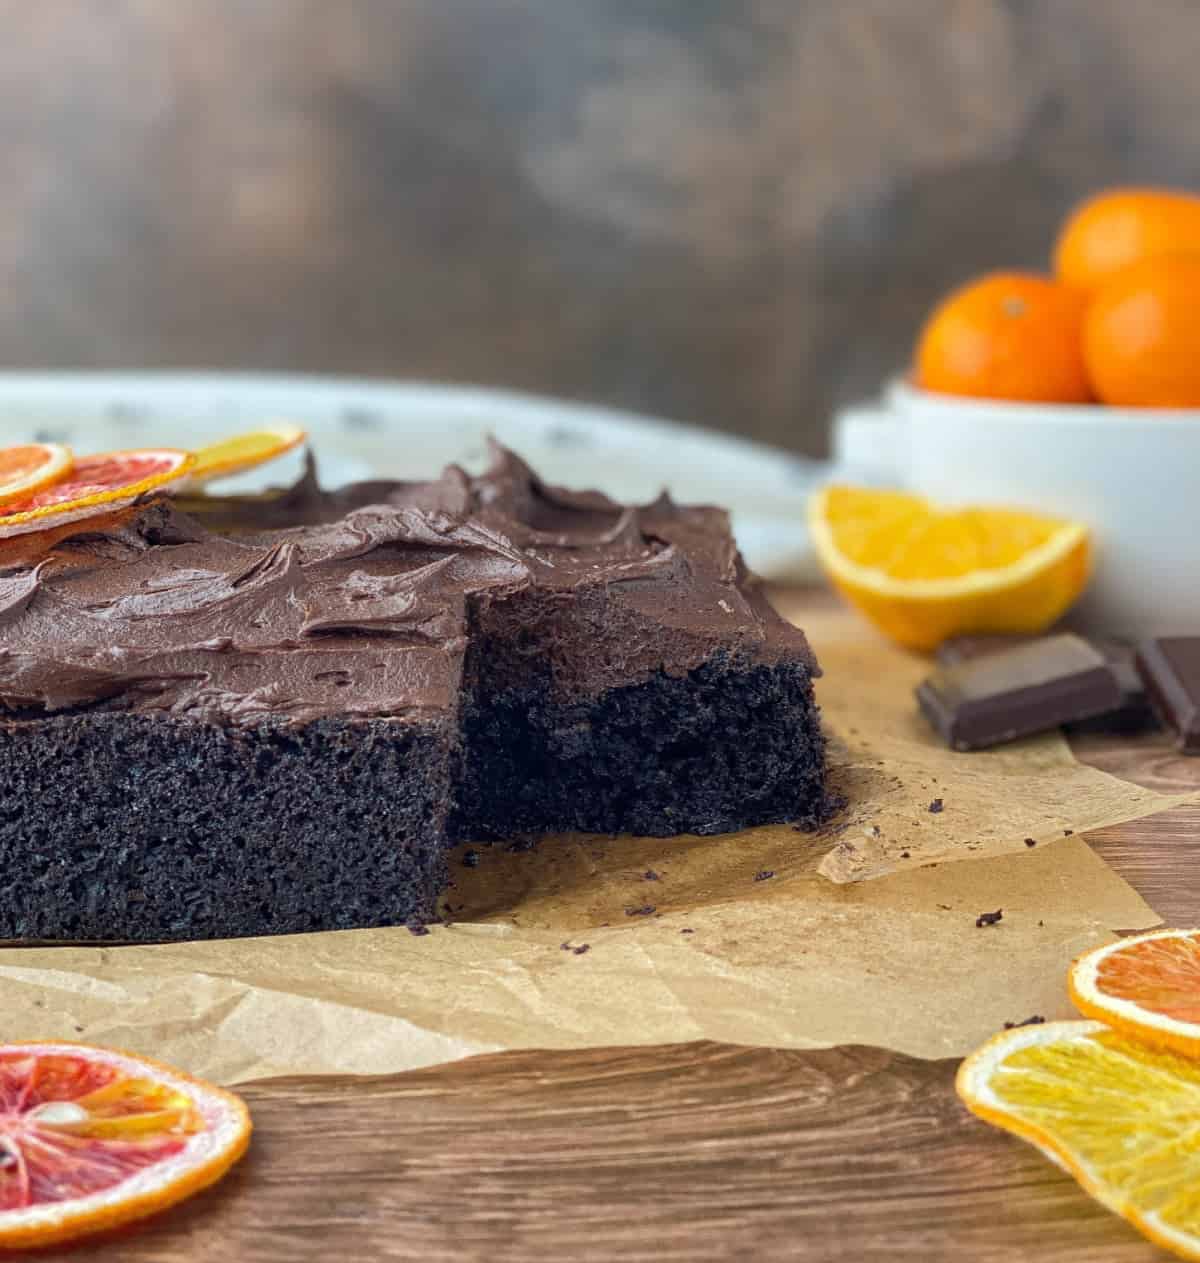 Chocolate Orange Cake with slice missing.